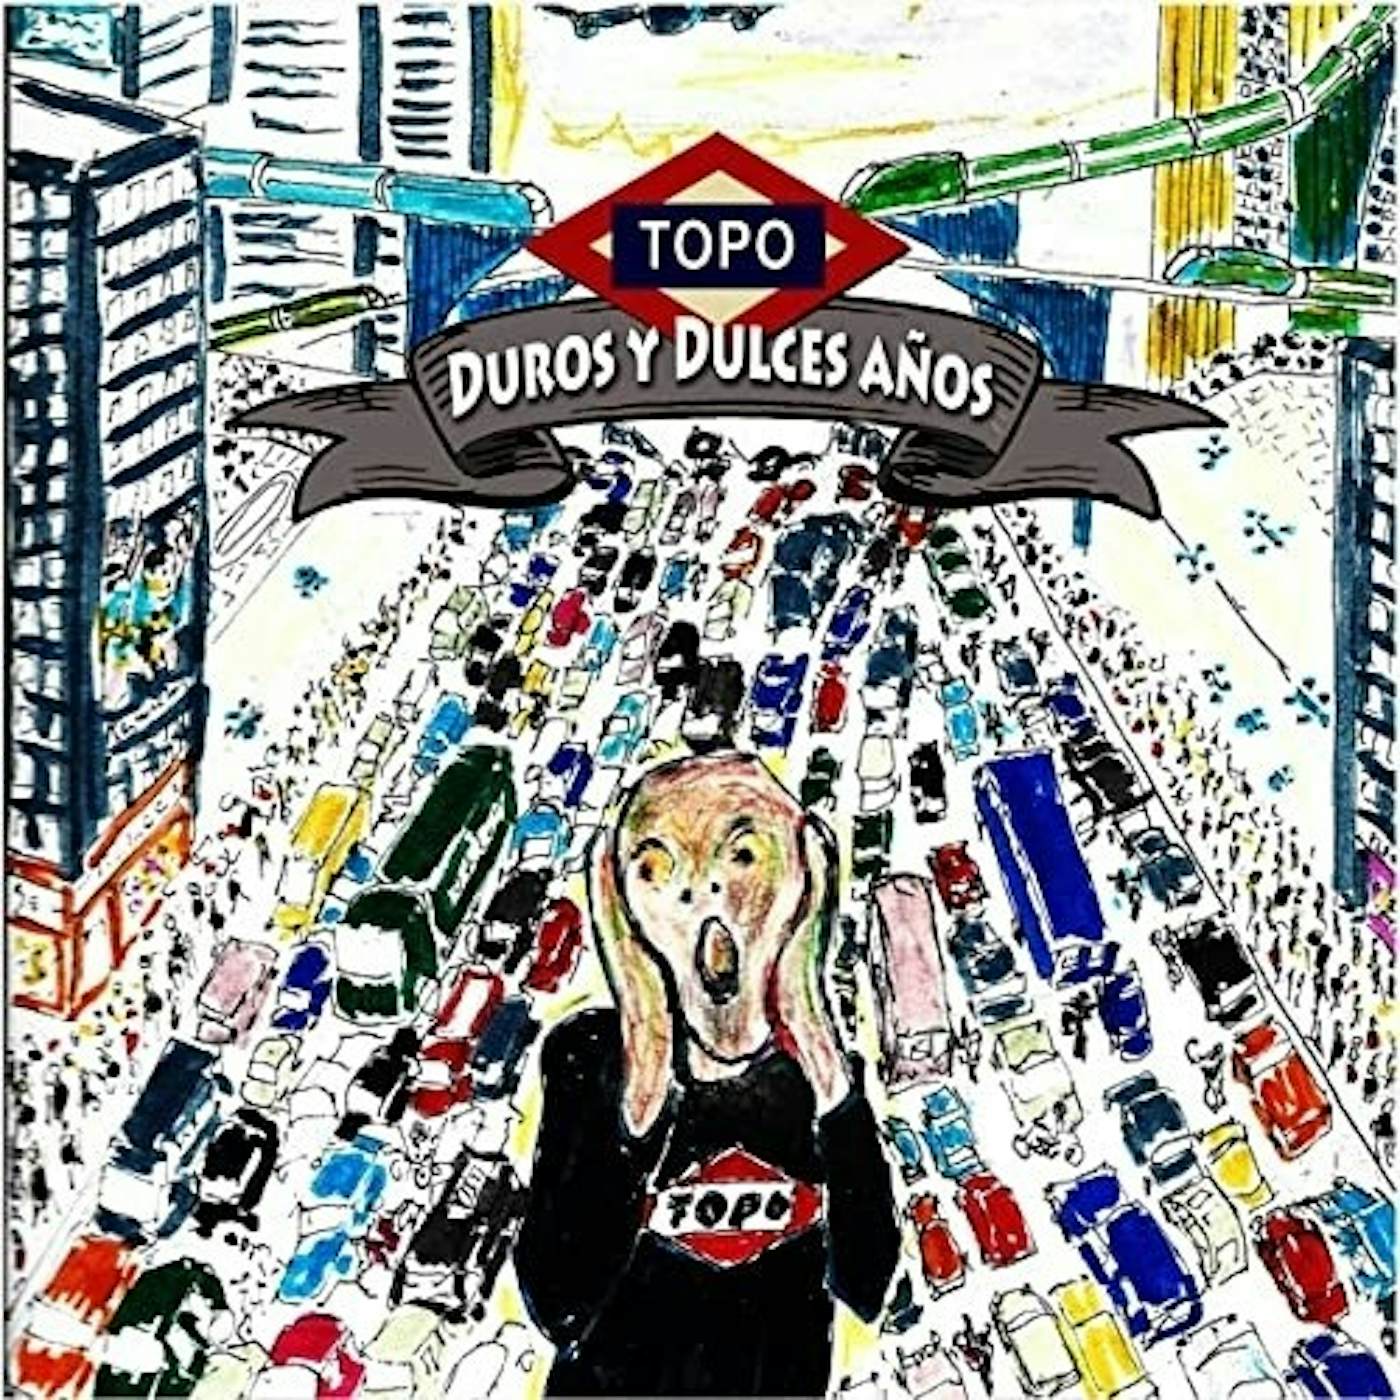 Topo DUROS Y DULCES ANOS CD